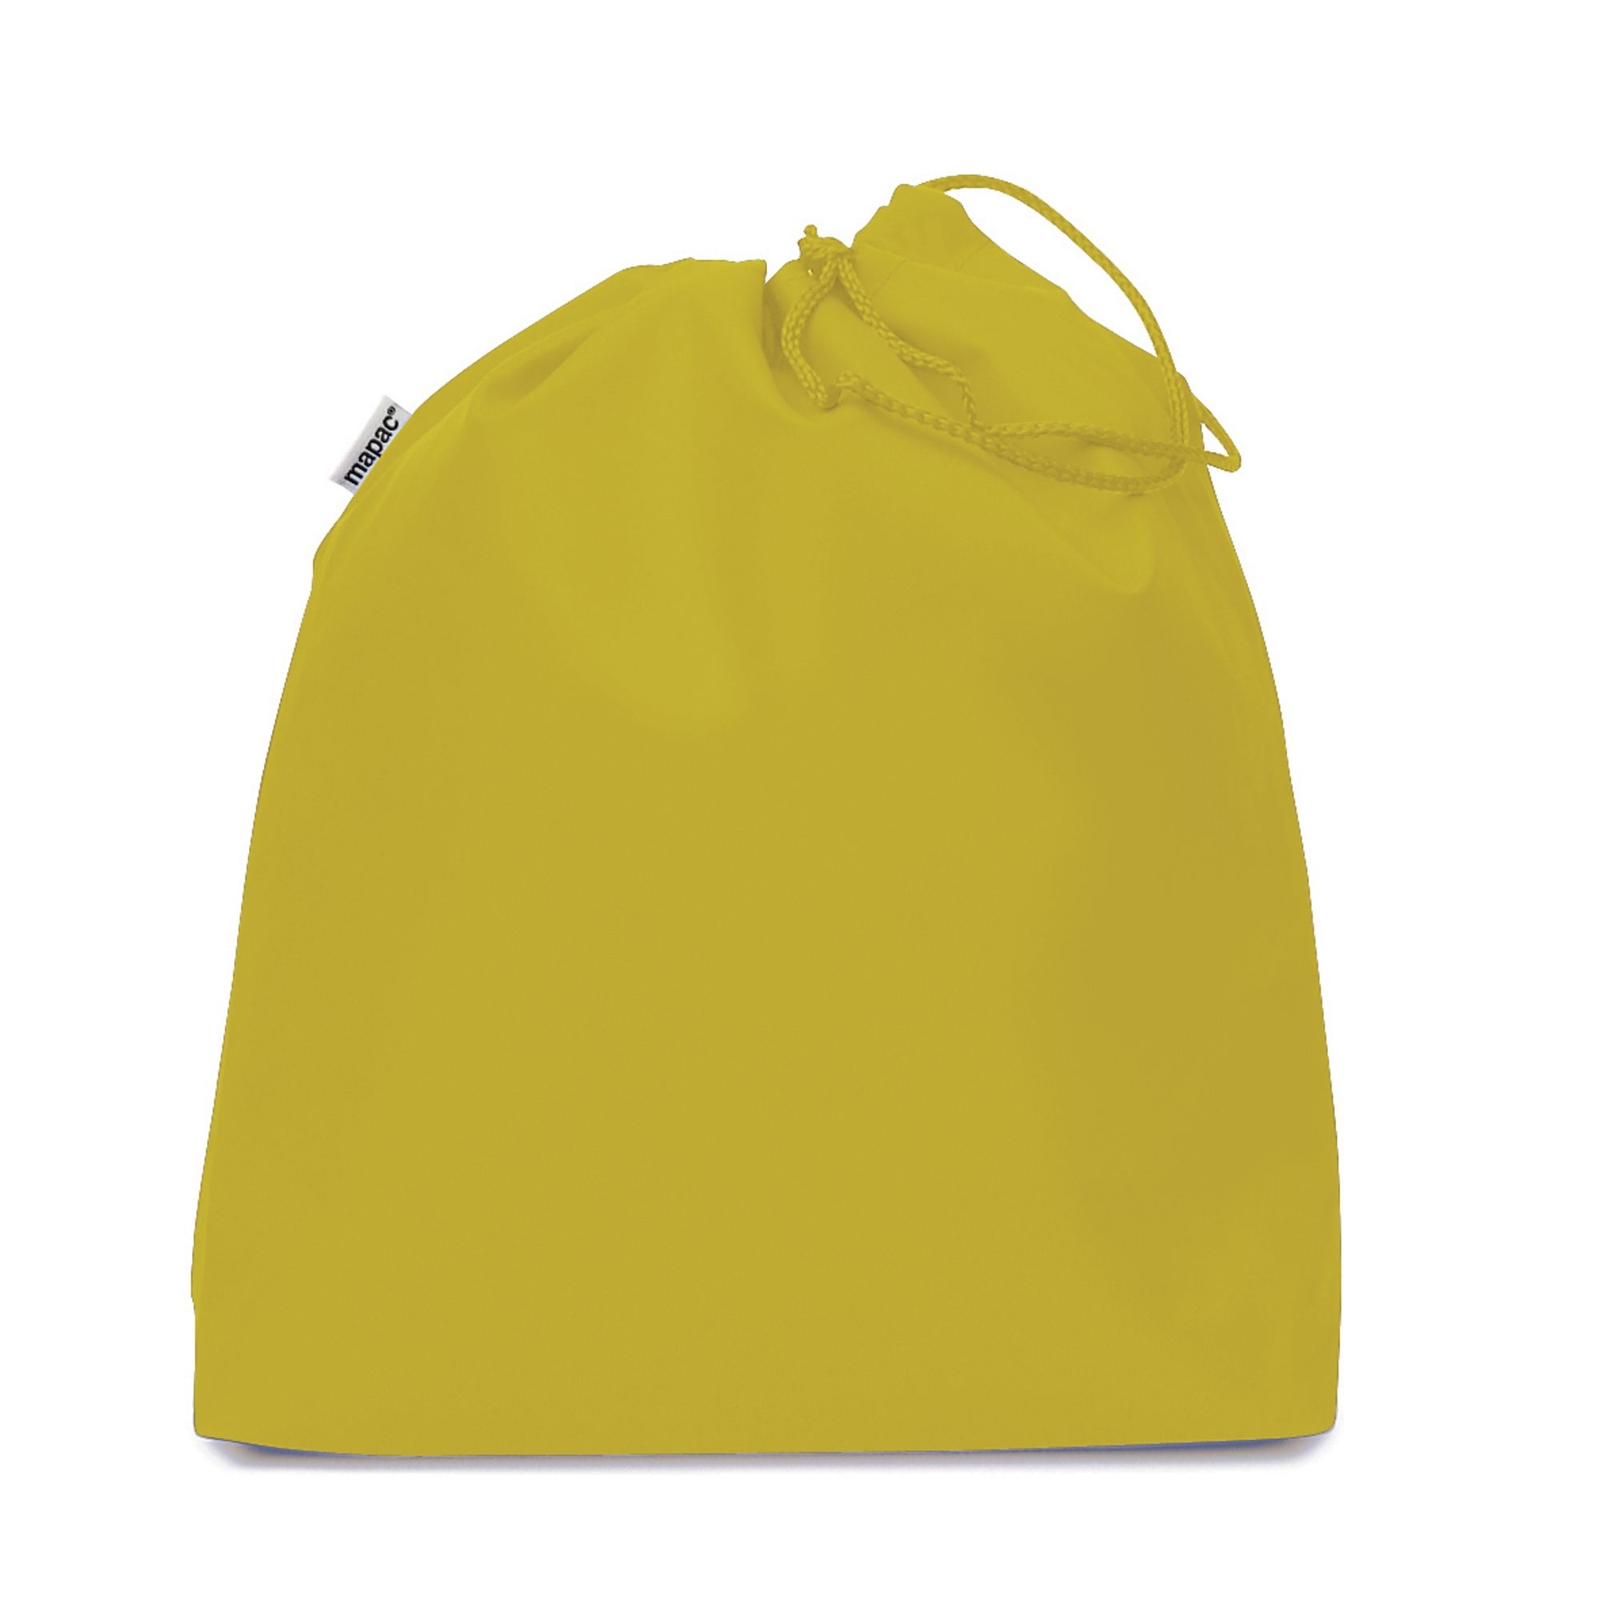 Plain Gym Bag Yellow - Pack of 25